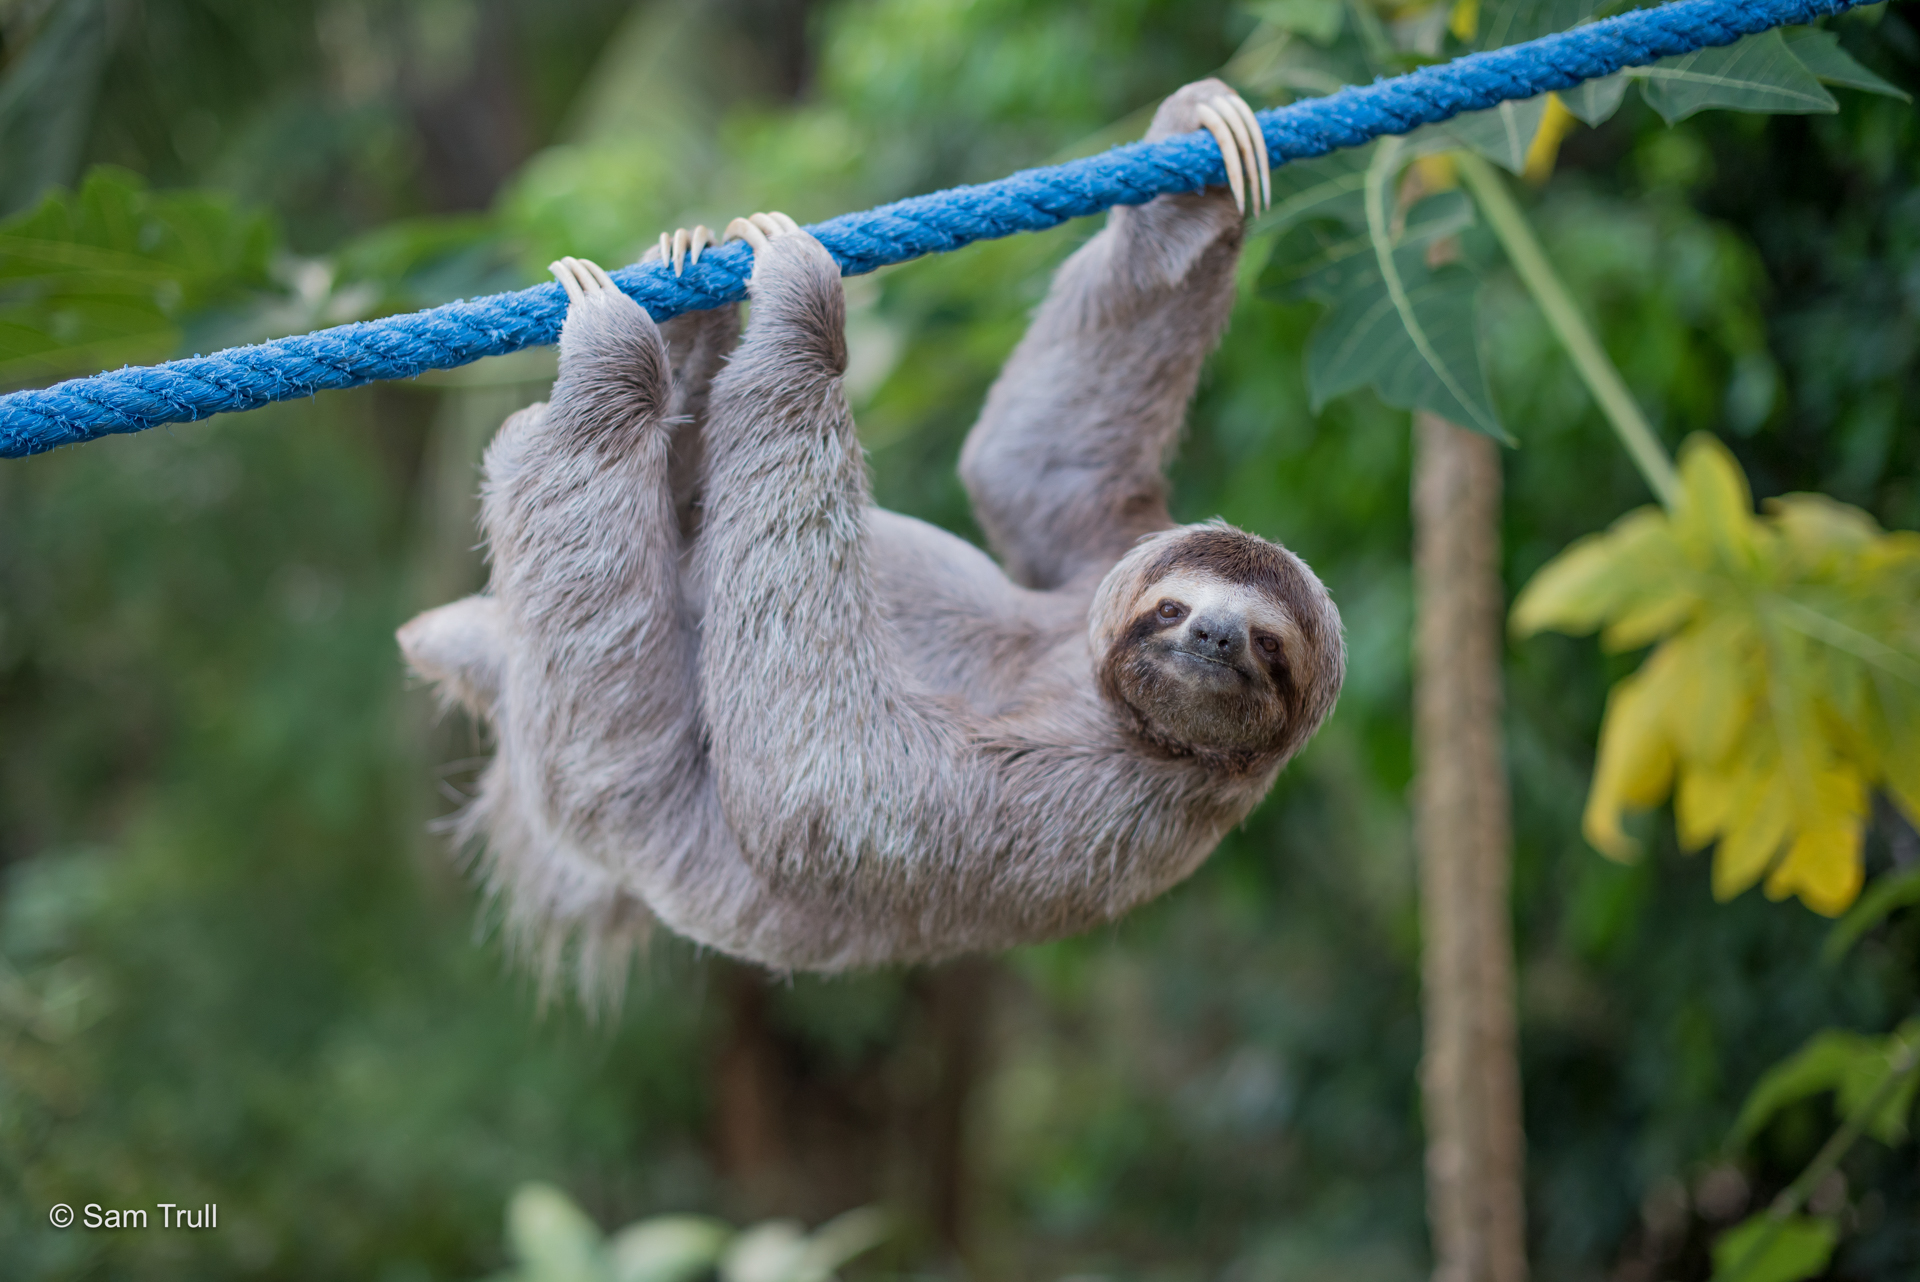 Raspberry on a sloth speedway